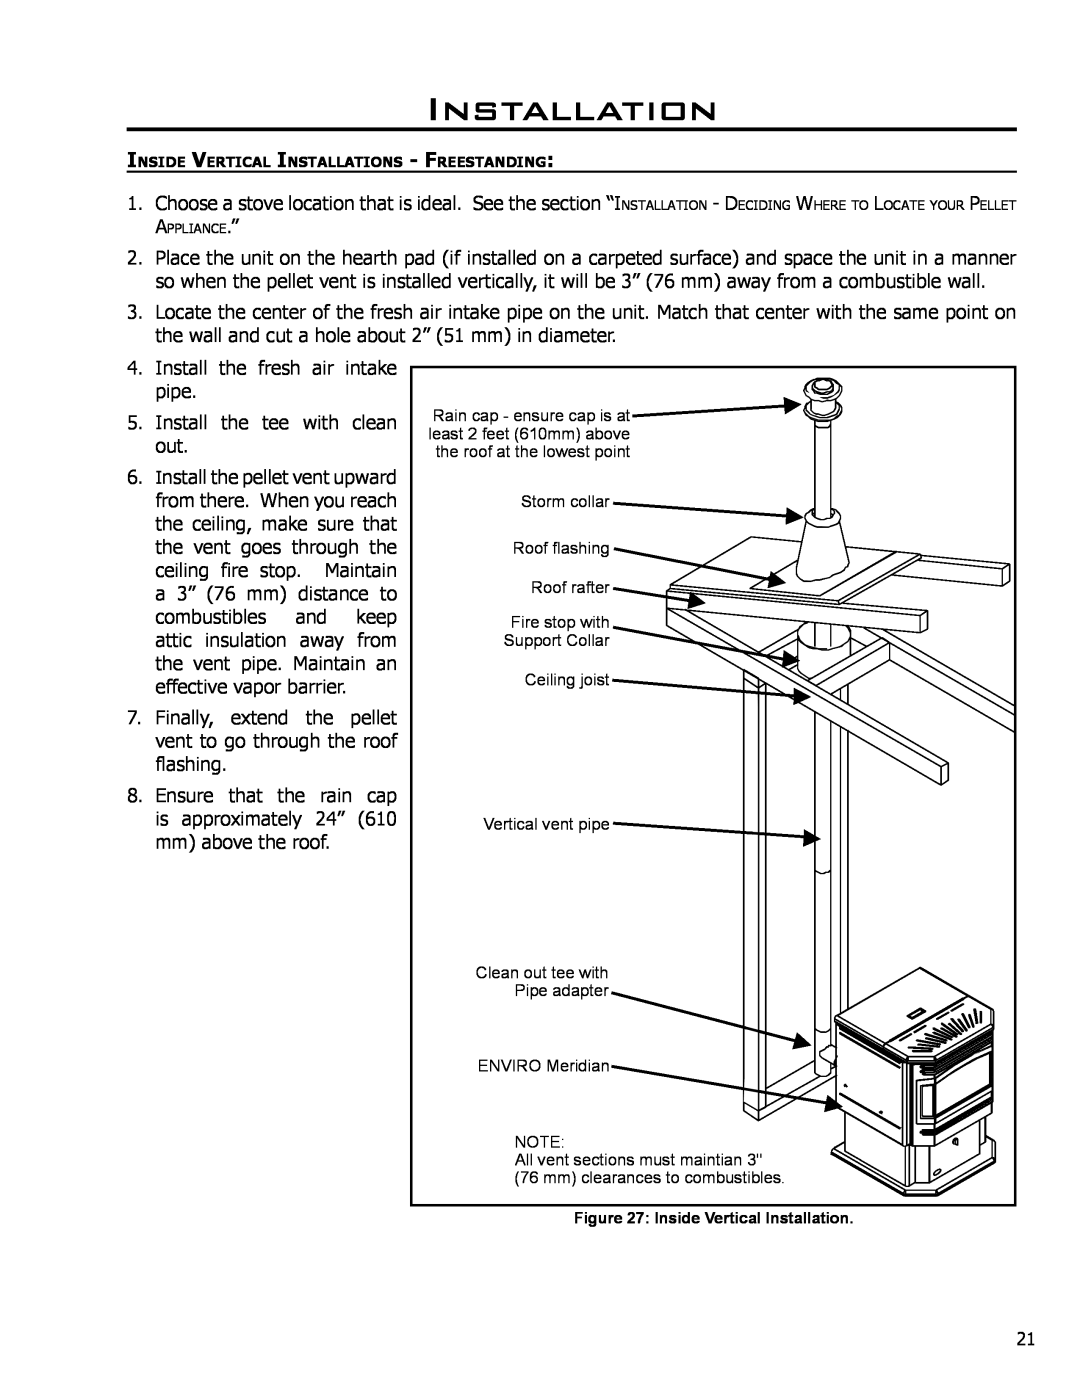 Enviro Meridian owner manual Installation, Install the fresh air intake pipe 